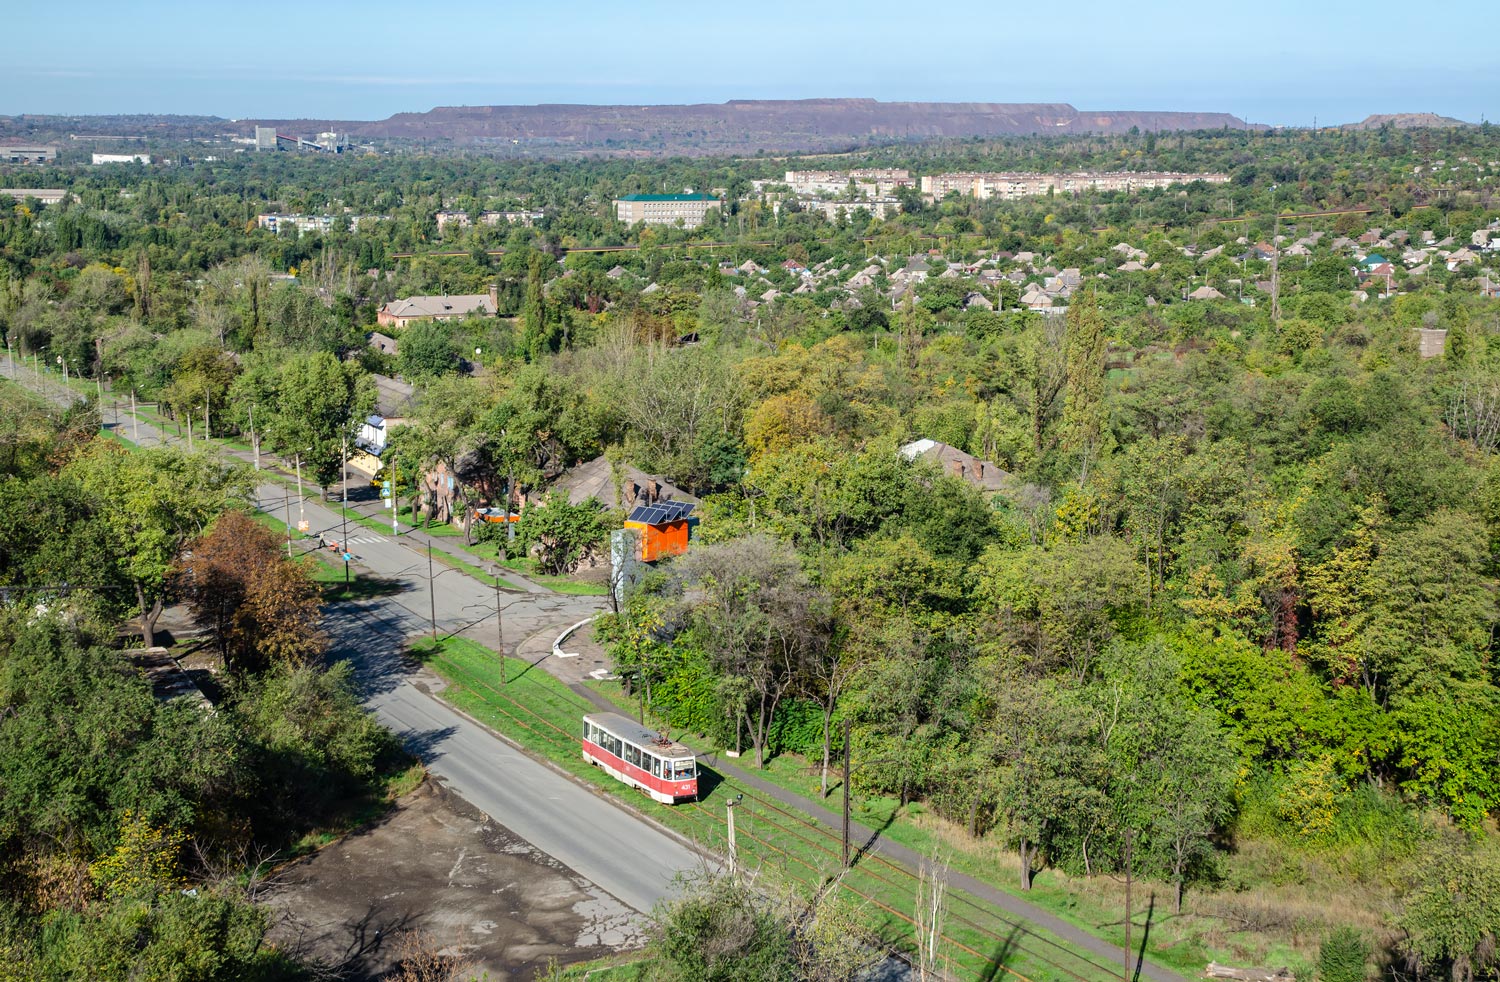 Kryvyi Rih — Tram and trolleybus lines and loops